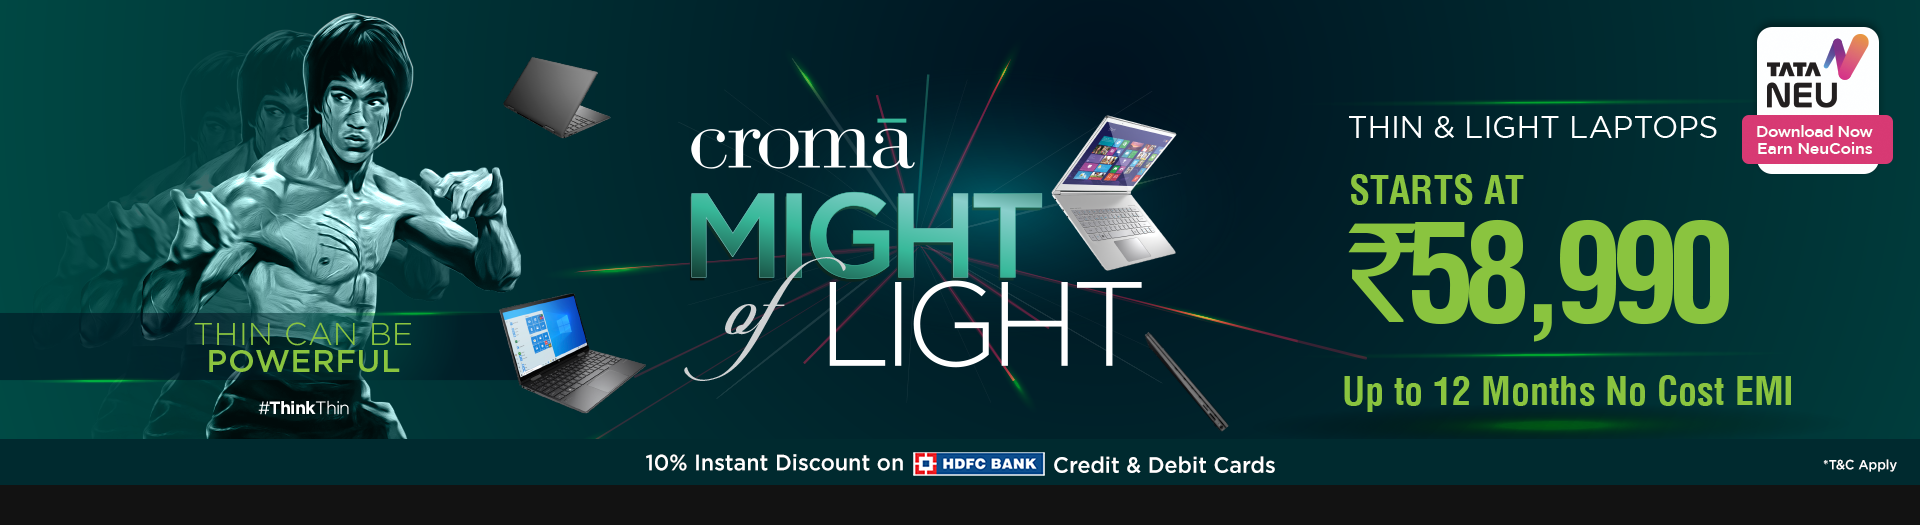 croma.com - Ultra Thin Laptops